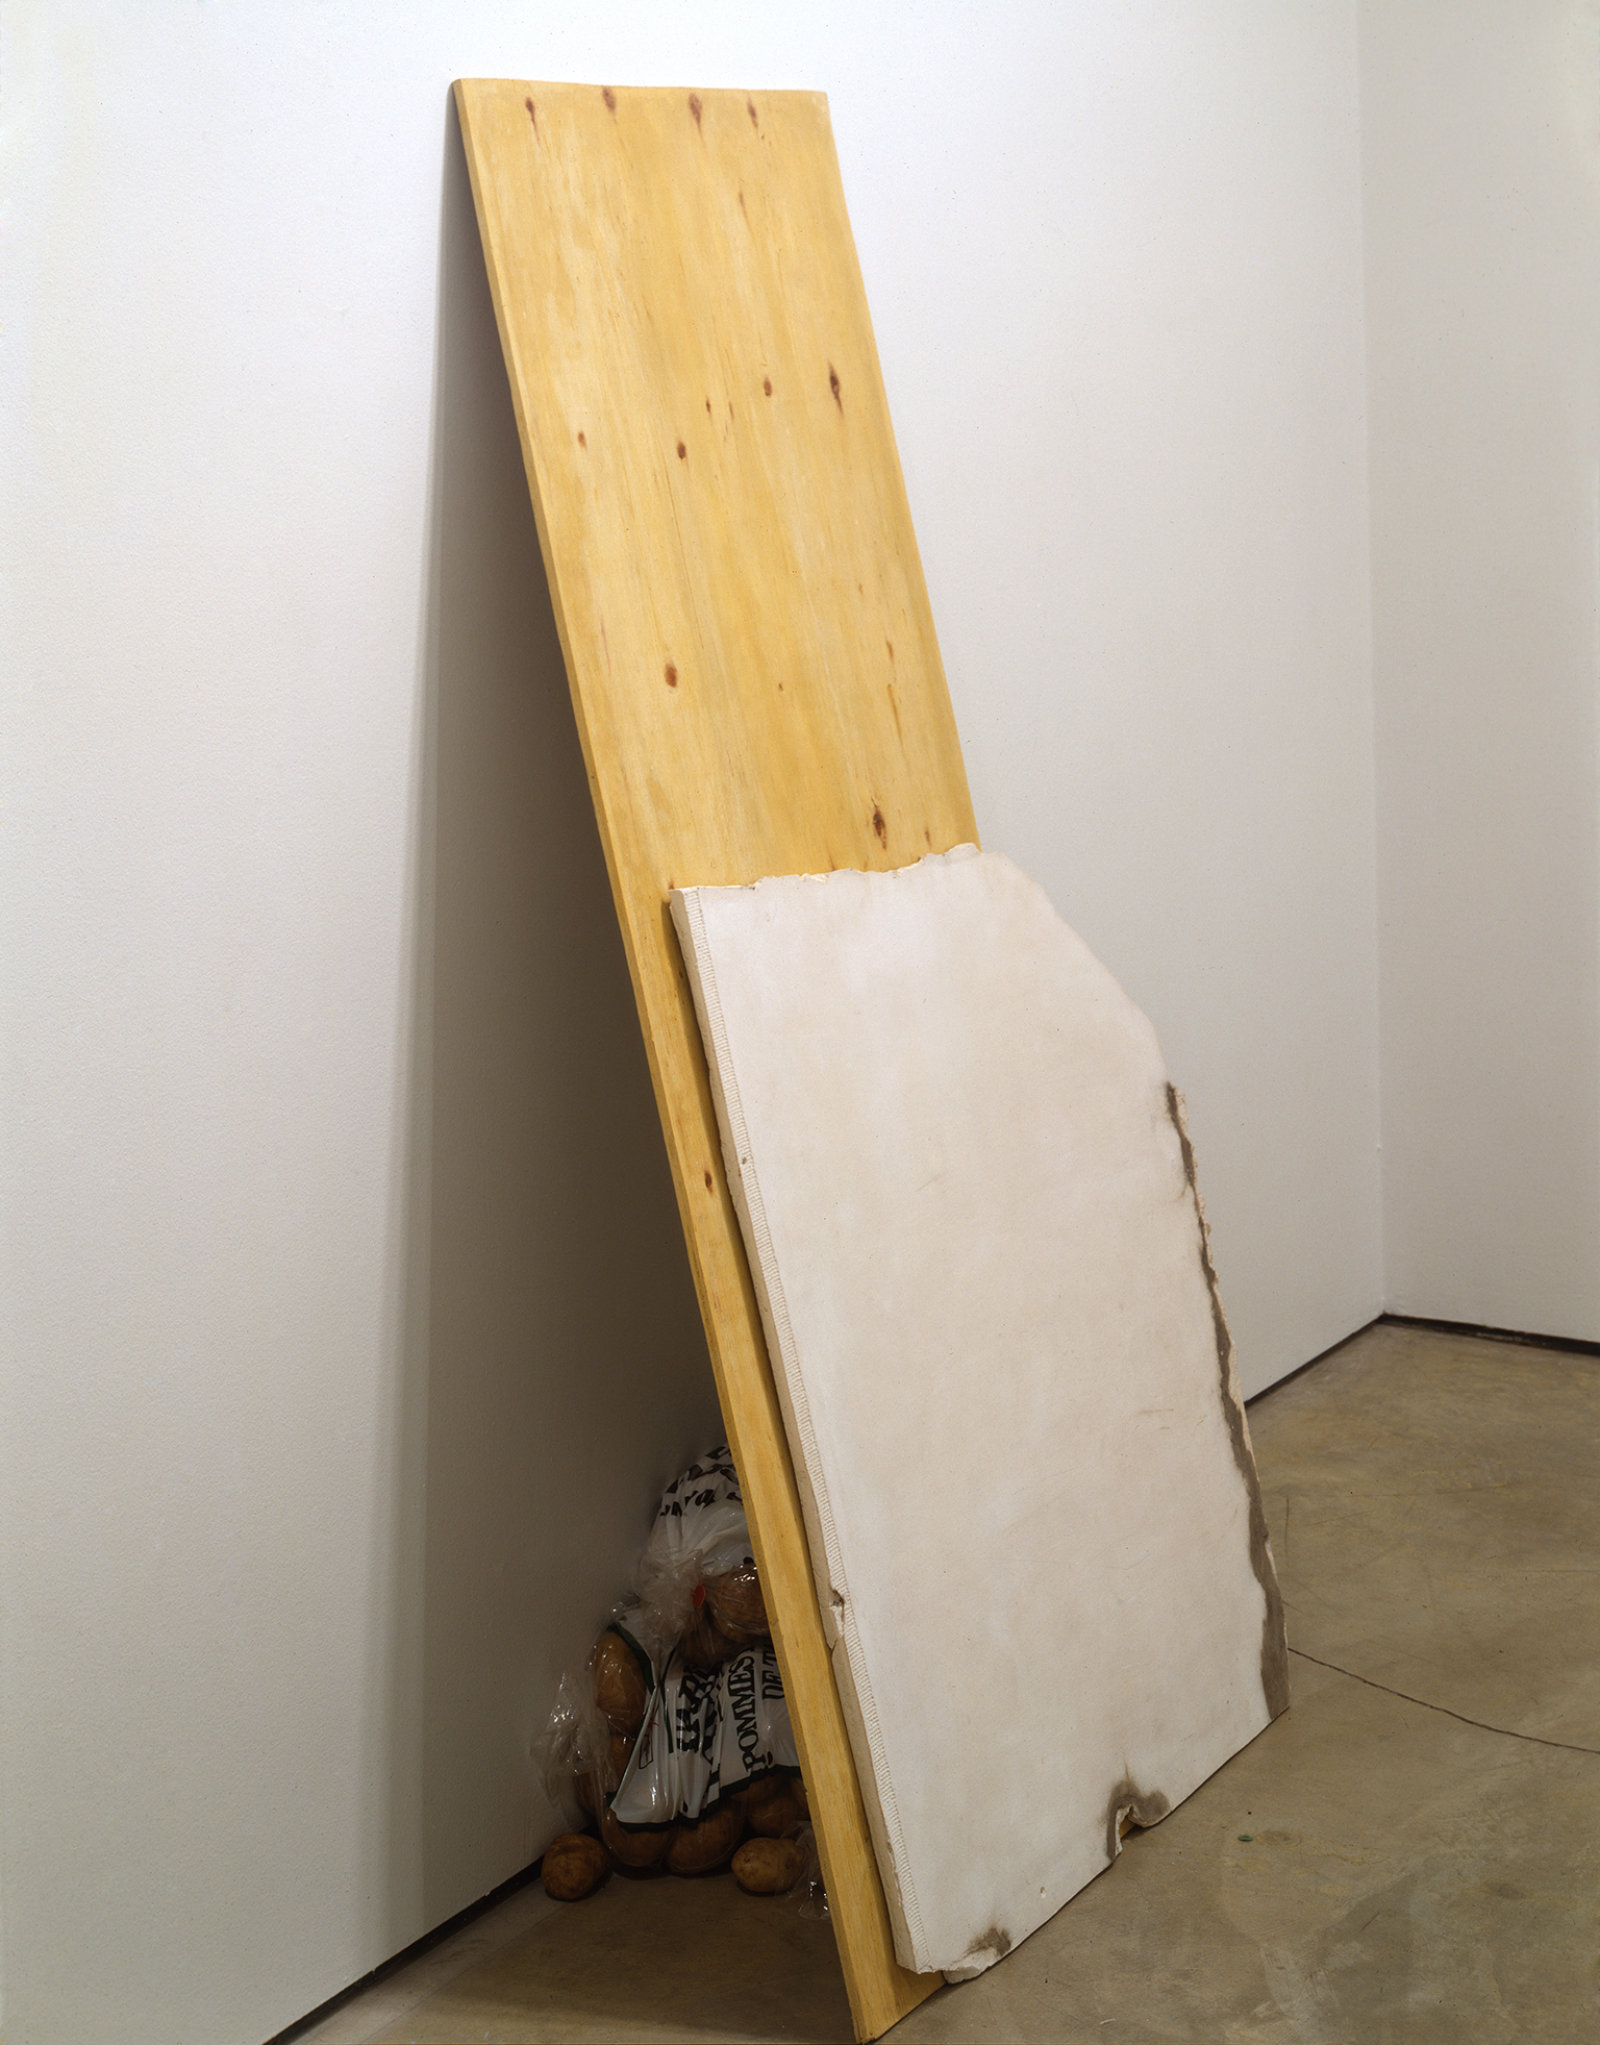 Liz Magor, Stores, 2000, plaster, resin, food, 61 x 32 x 14 in. (155 x 81 x 36 cm)